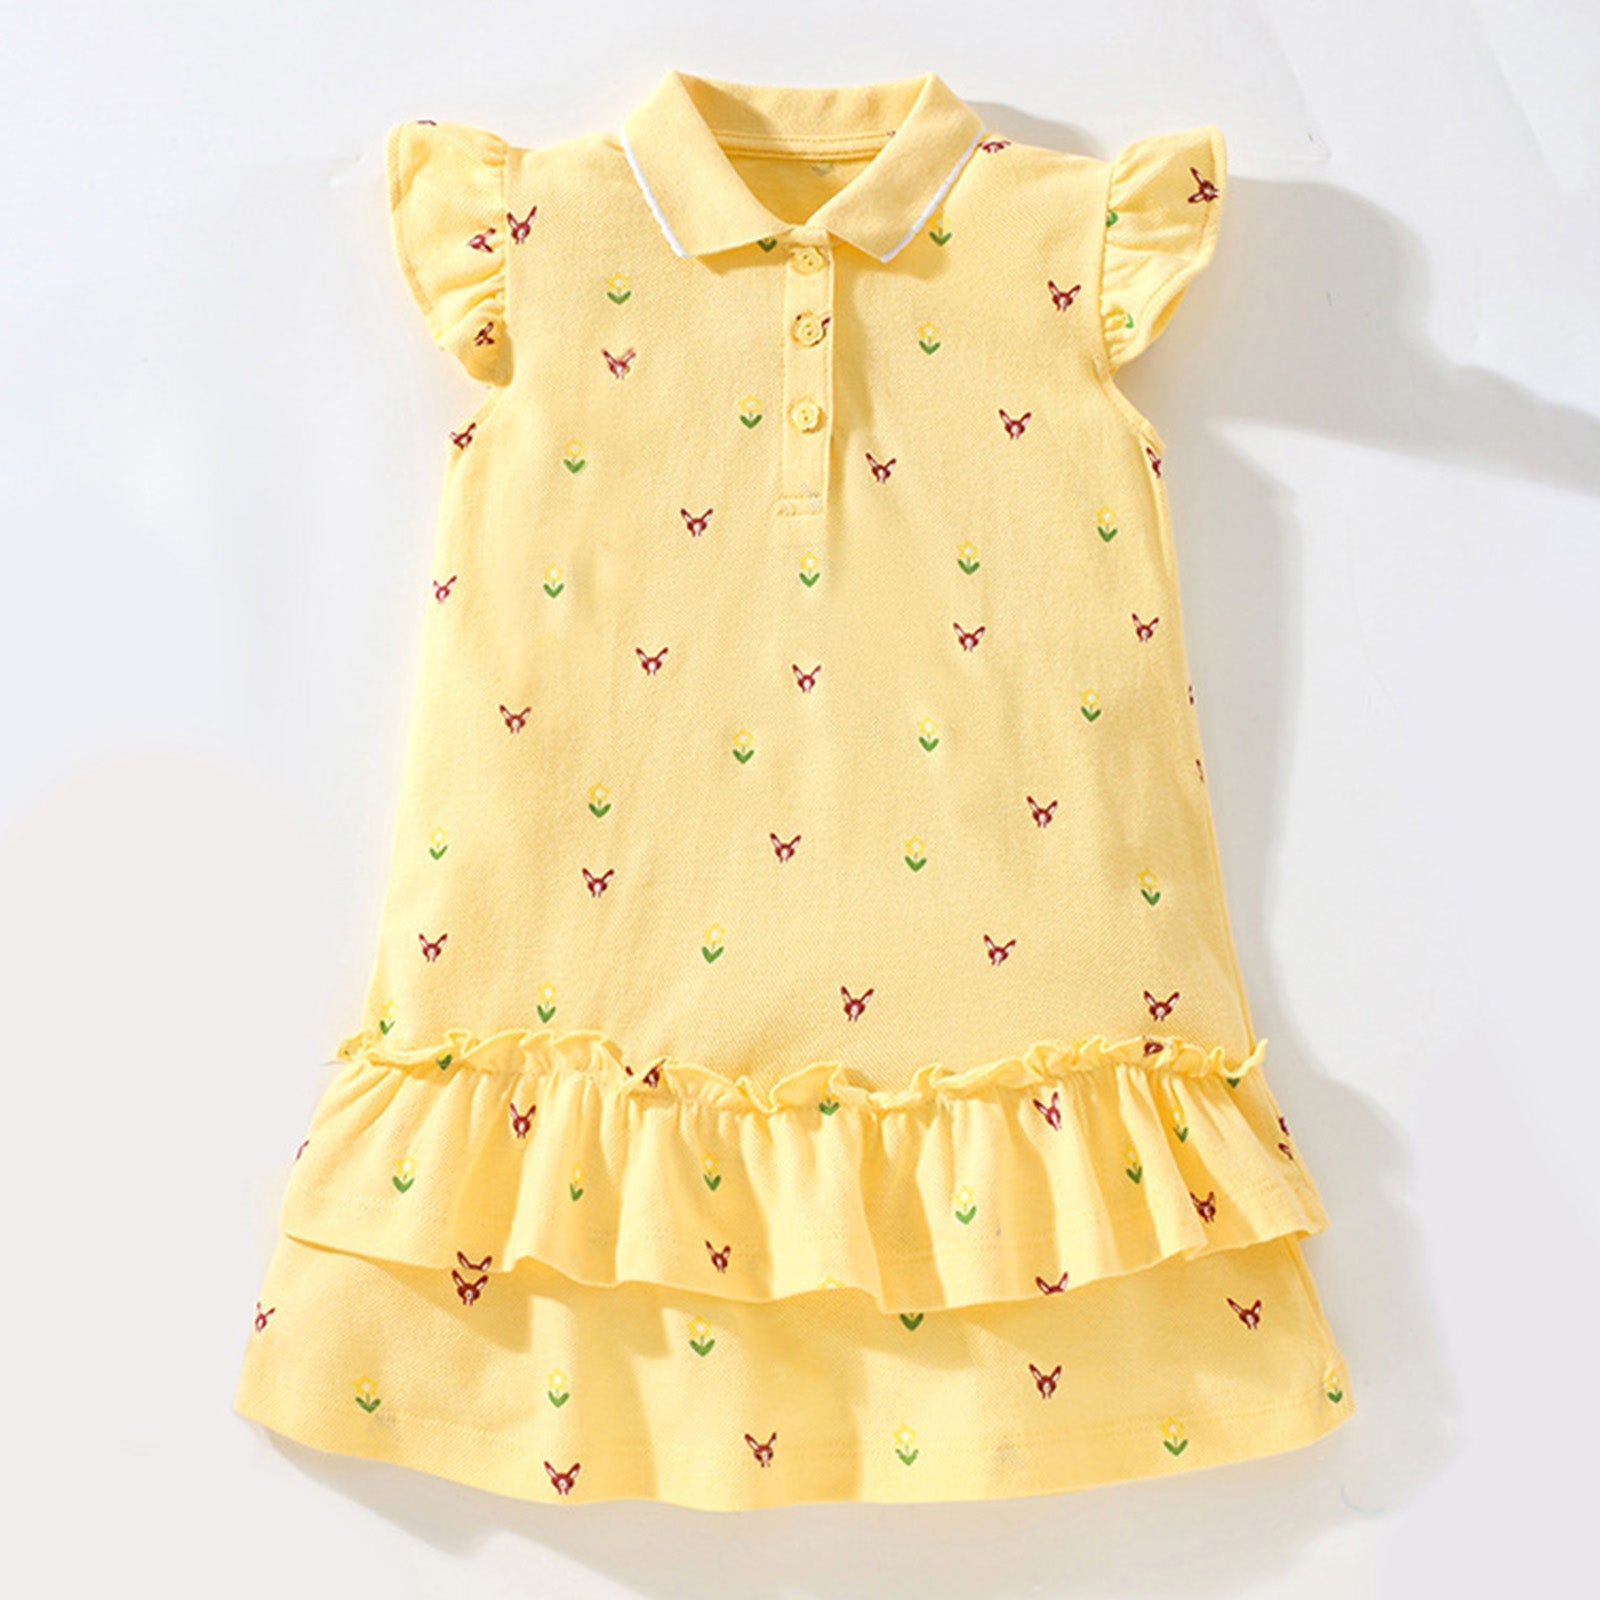 Tiny Cuddling Toddler Girls Short Sleeve Dress Cotton Casual Summer Sundress Cartoon Ruffle Sleevaless - babeliobaby